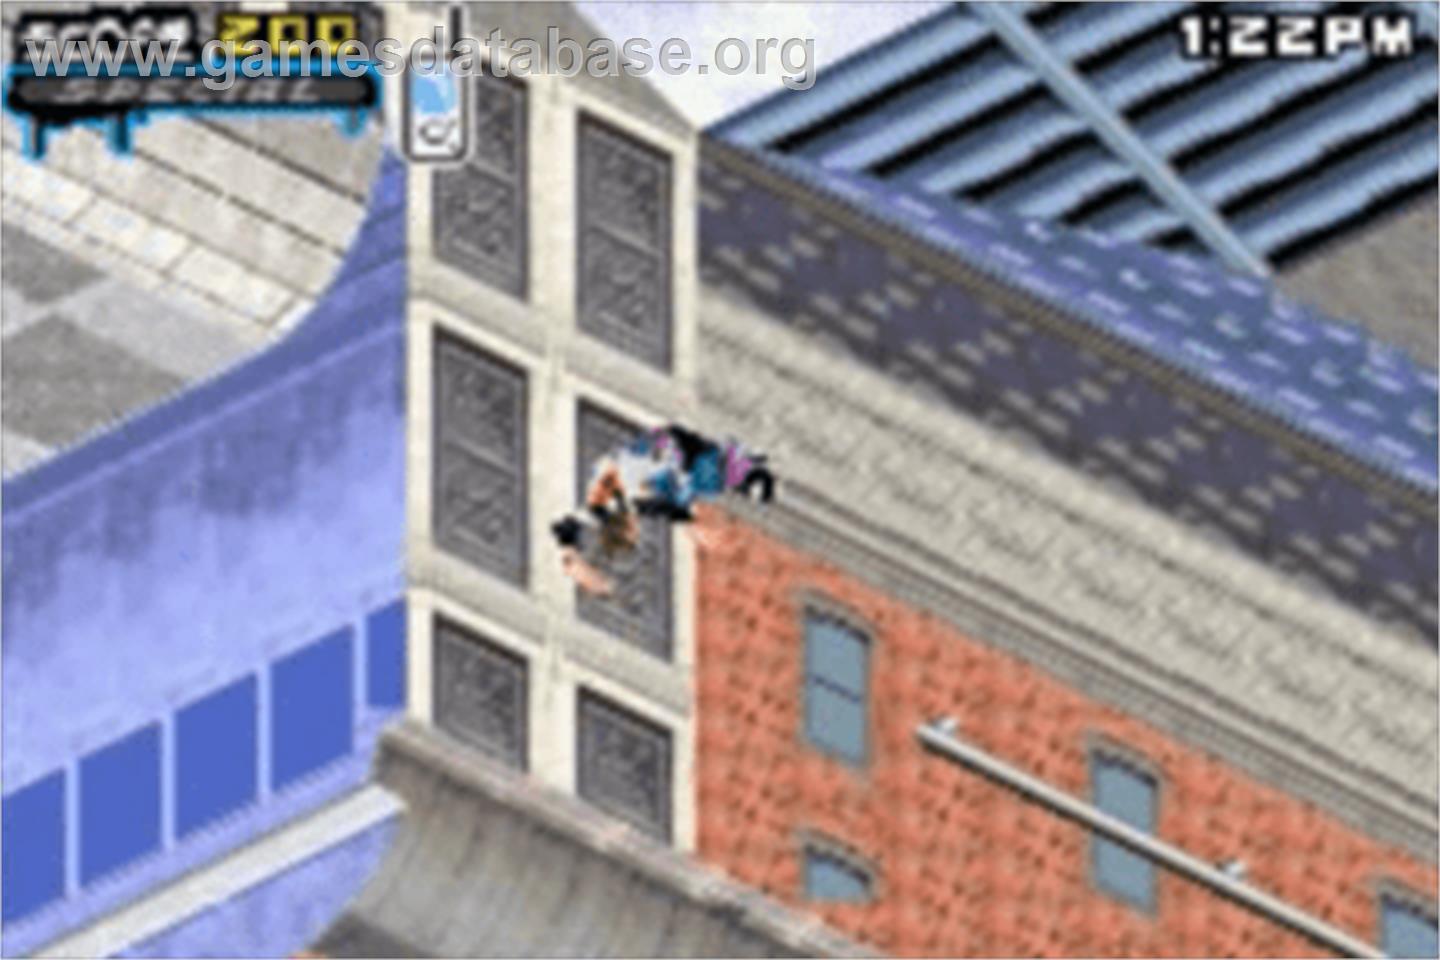 Tony Hawk's Underground 2 - Nintendo Game Boy Advance - Artwork - In Game